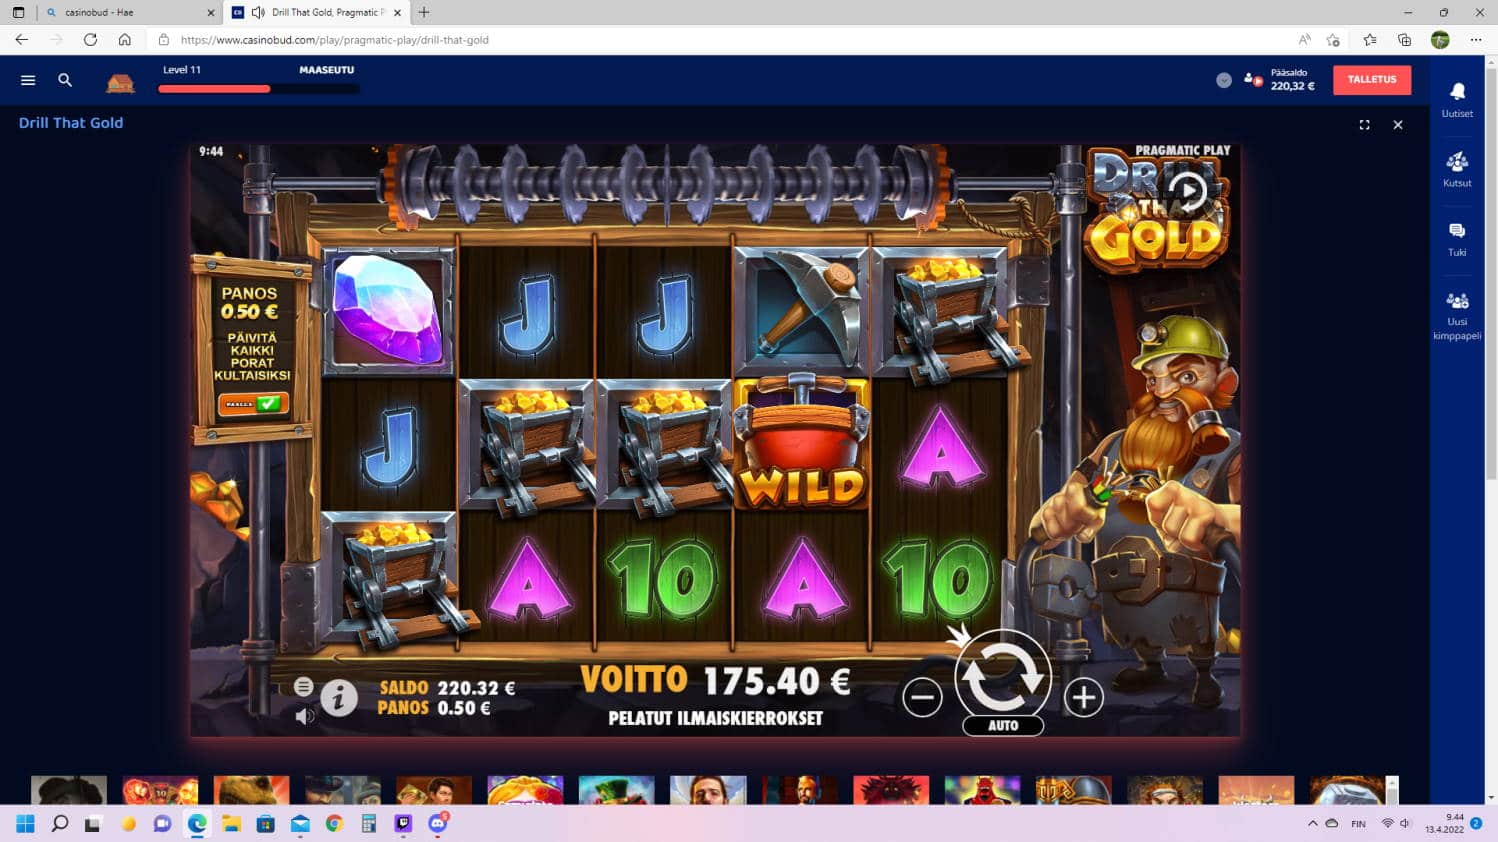 Drill That Gold Casino win picture by osmo’s kosmos 13.4.2022 175.40e 351X Casino Bud